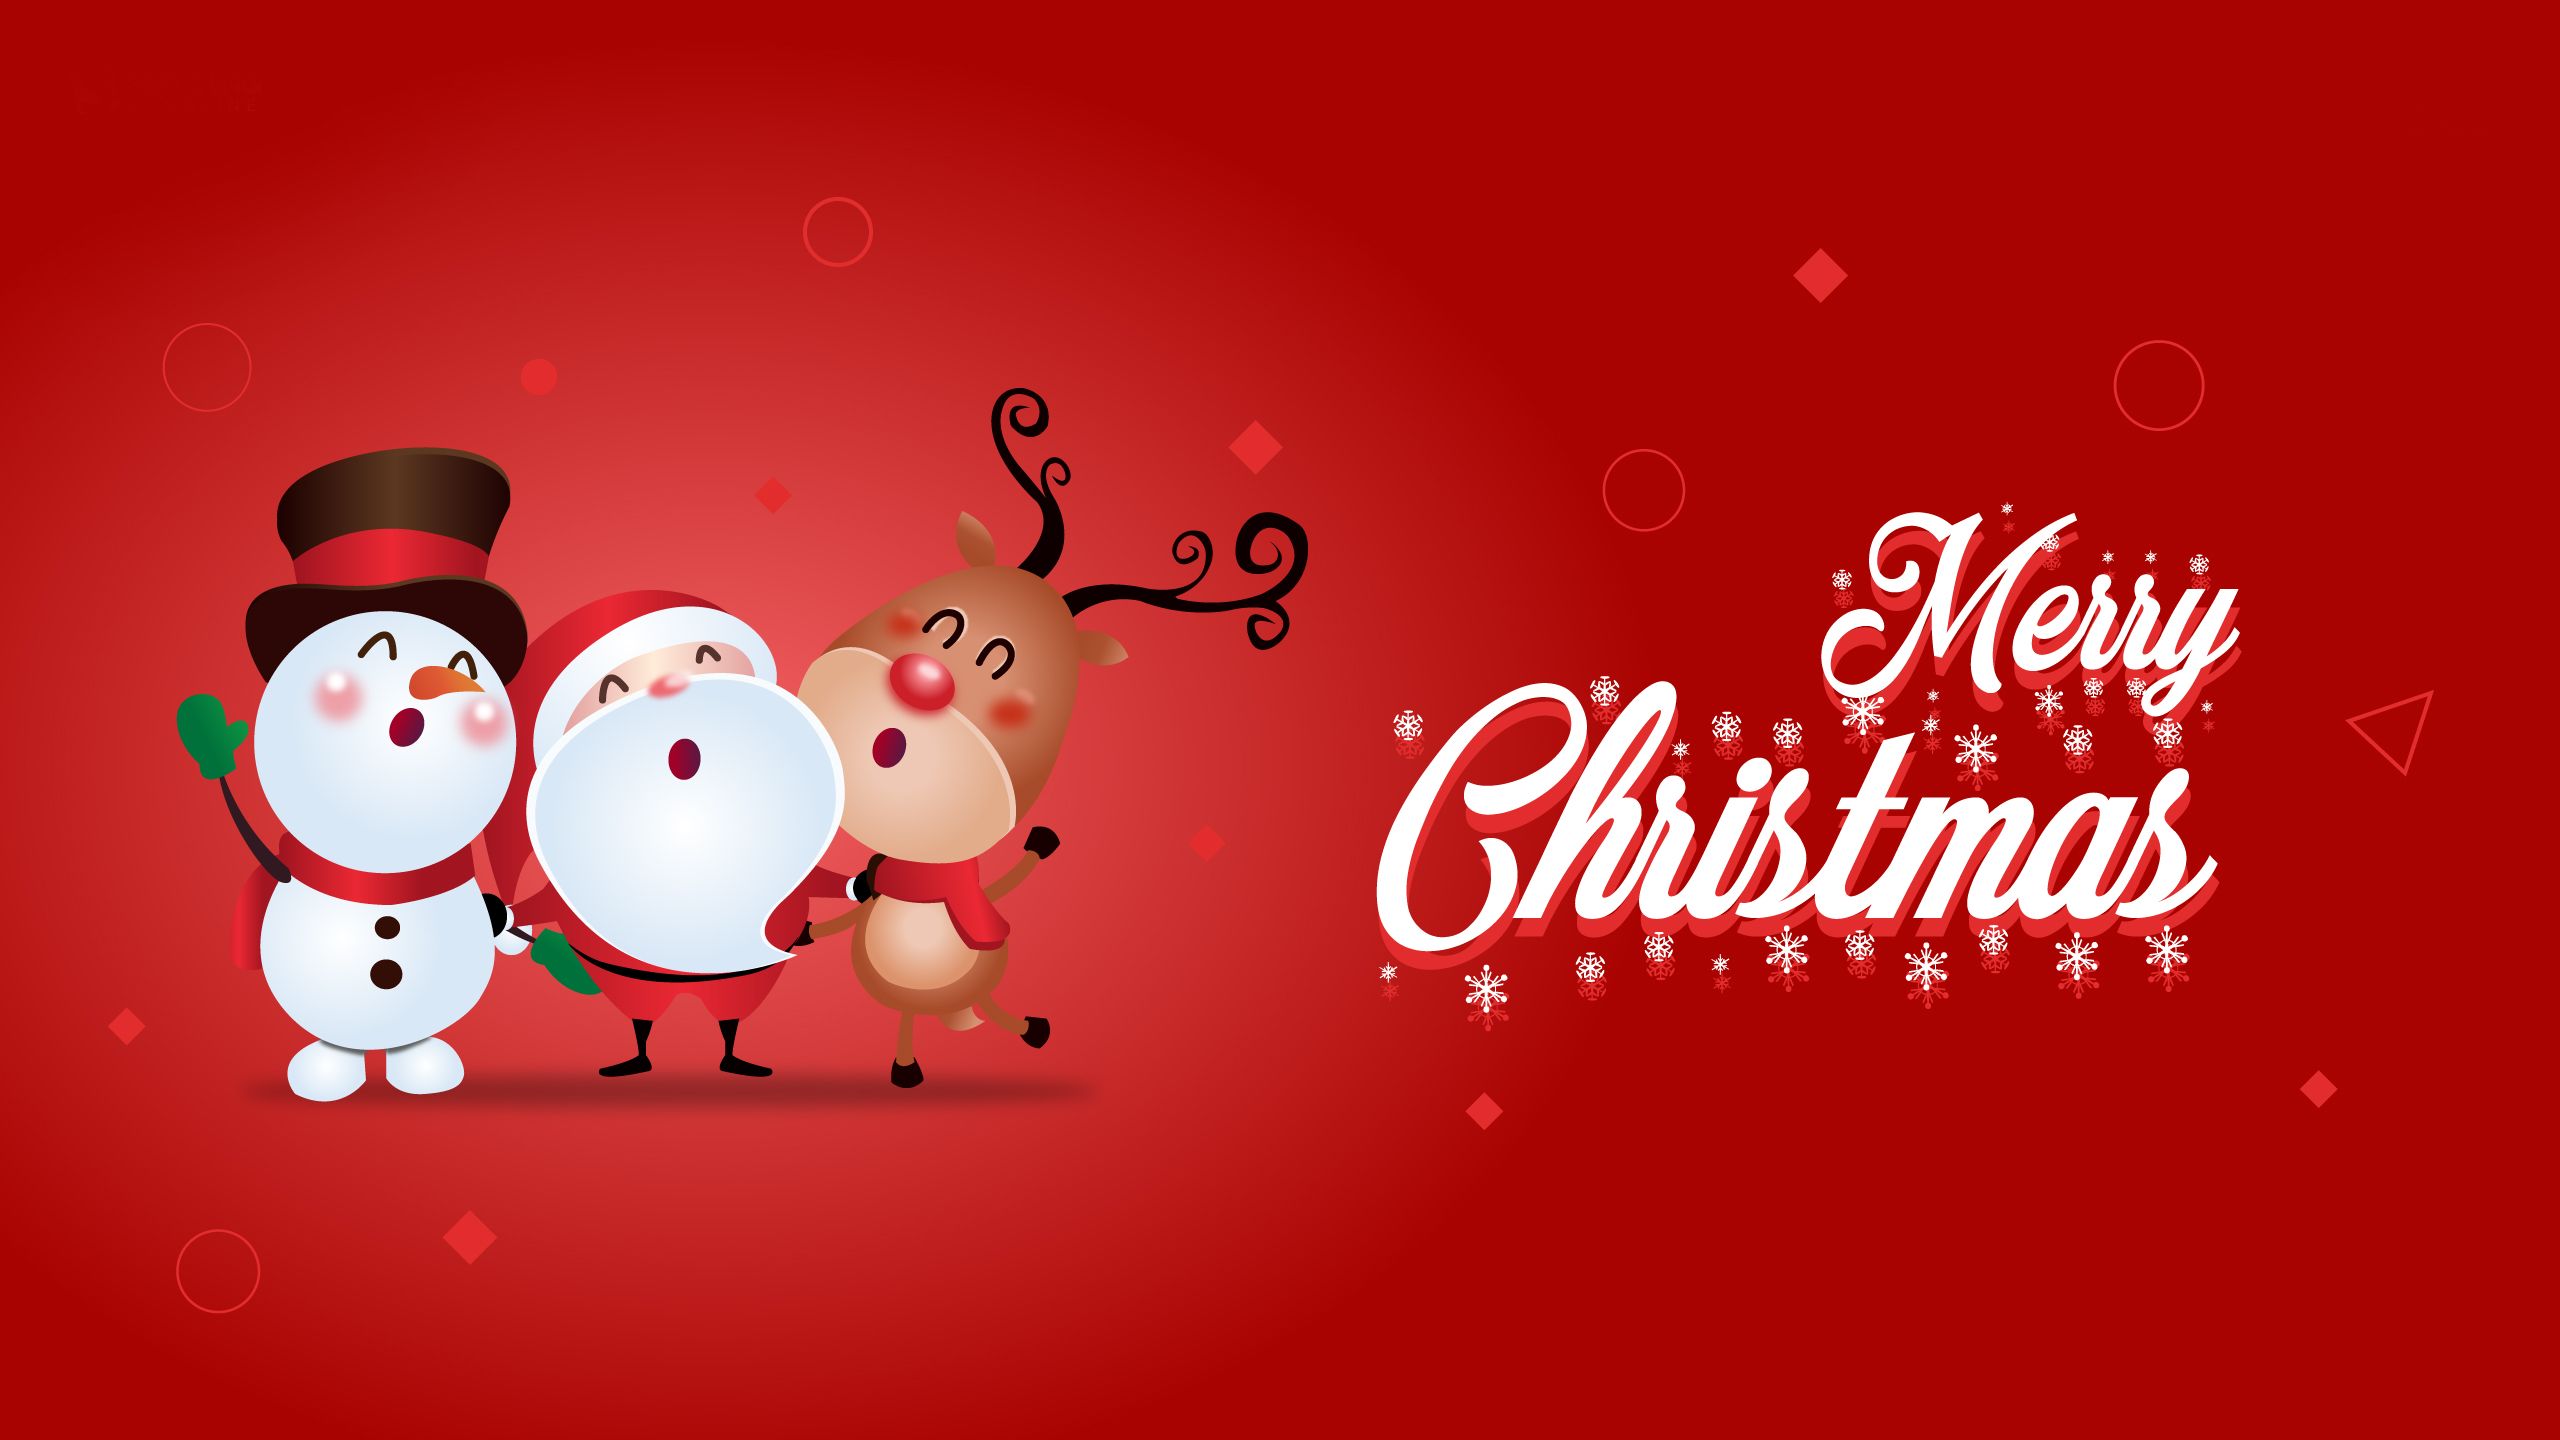 General 2560x1440 Christmas reindeer snowman Santa Claus simple background minimalism hat scarf antlers holiday